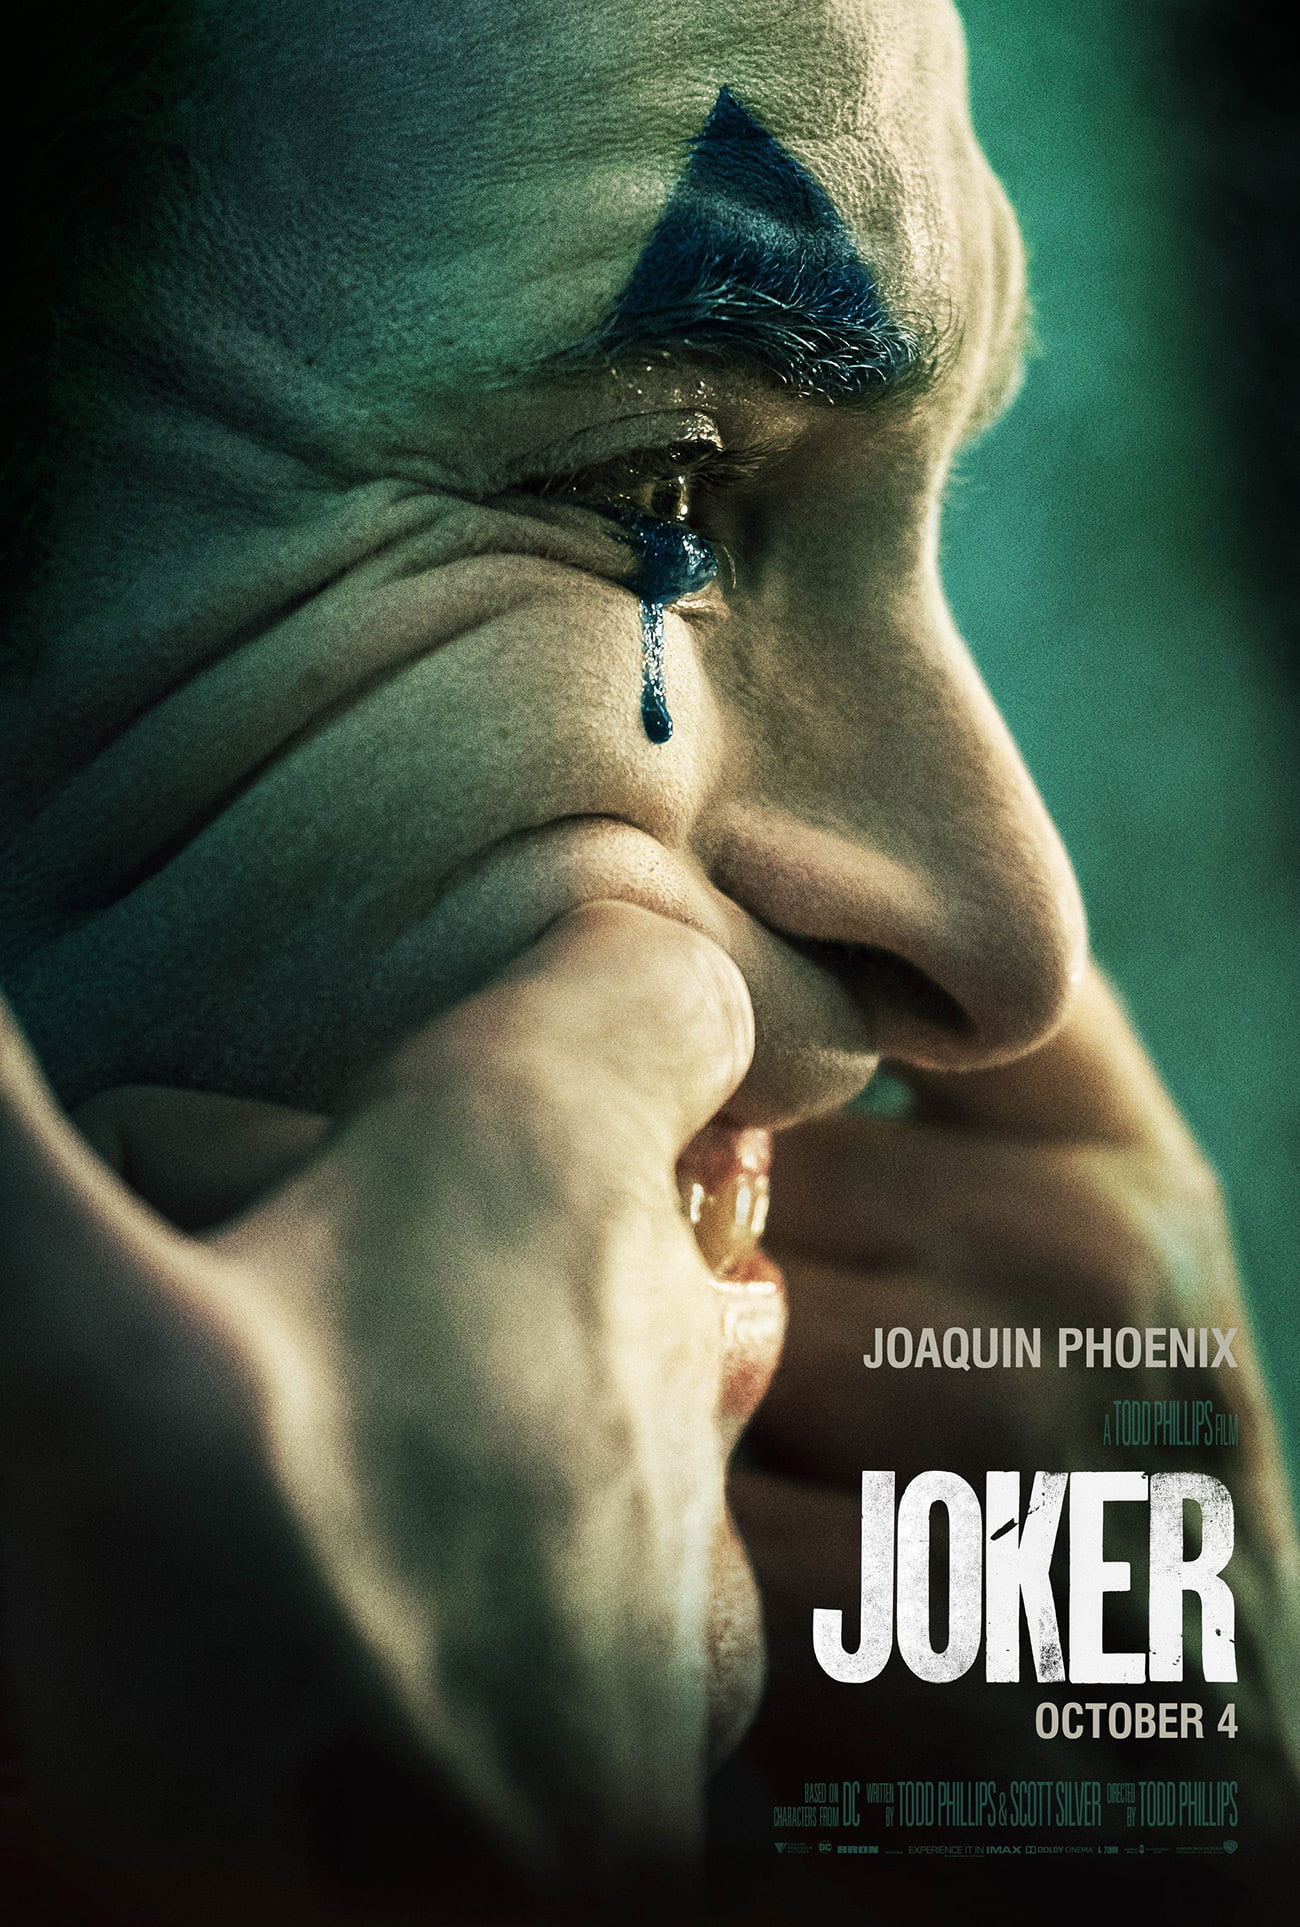 joker 2019 movie joker joaquin phoenix actor men hd wallpaper 8ac6c5f98dbfa28924eb0fcd9d0d983c